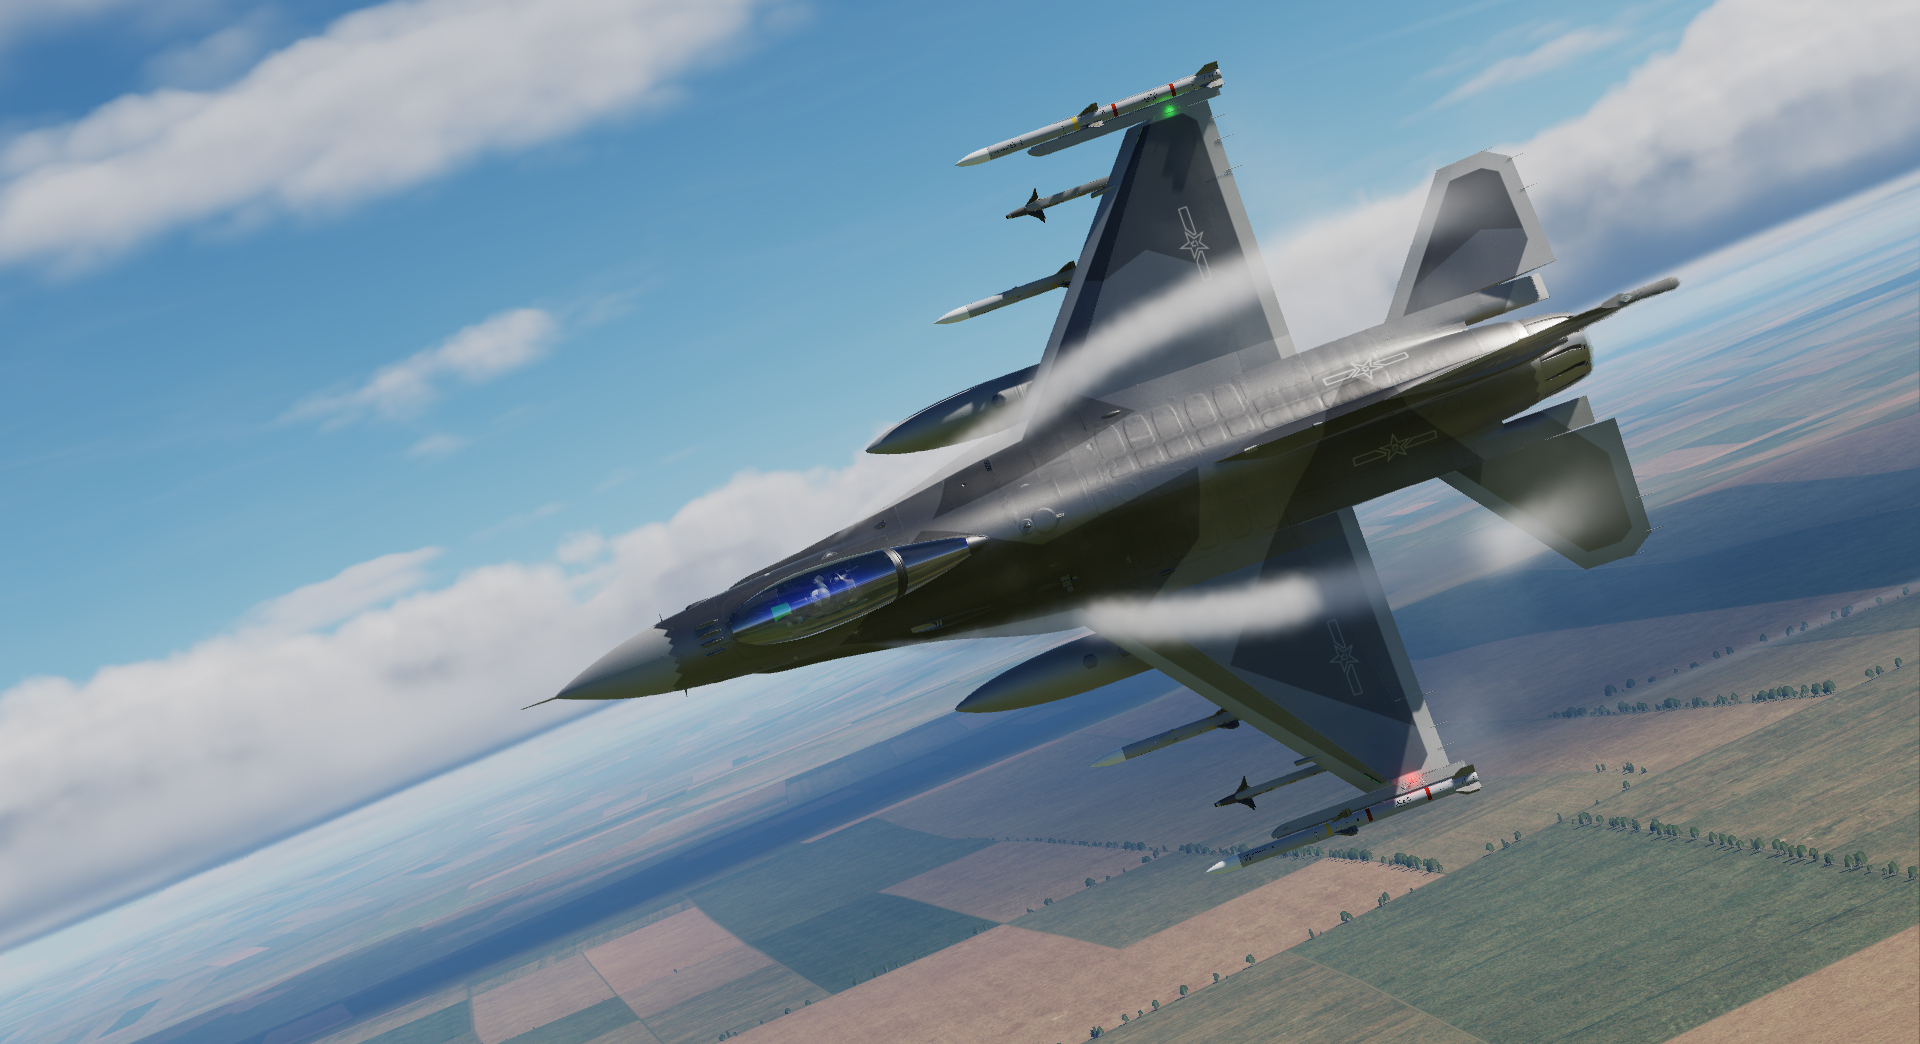 F-16 PLAAF J-20 Splinter Camo (Fictional) / 歼-20 割裂迷彩 (虚构) v1.1